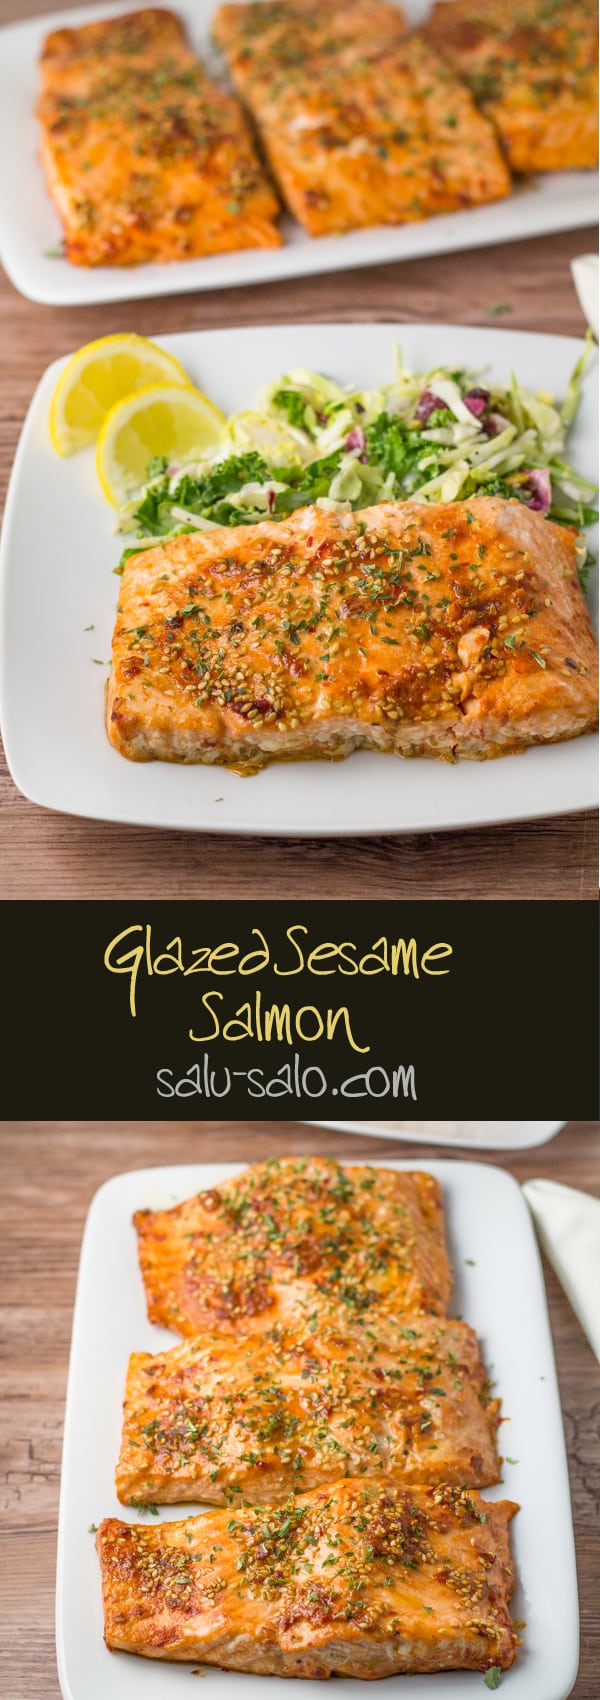 Glazed Sesame Salmon